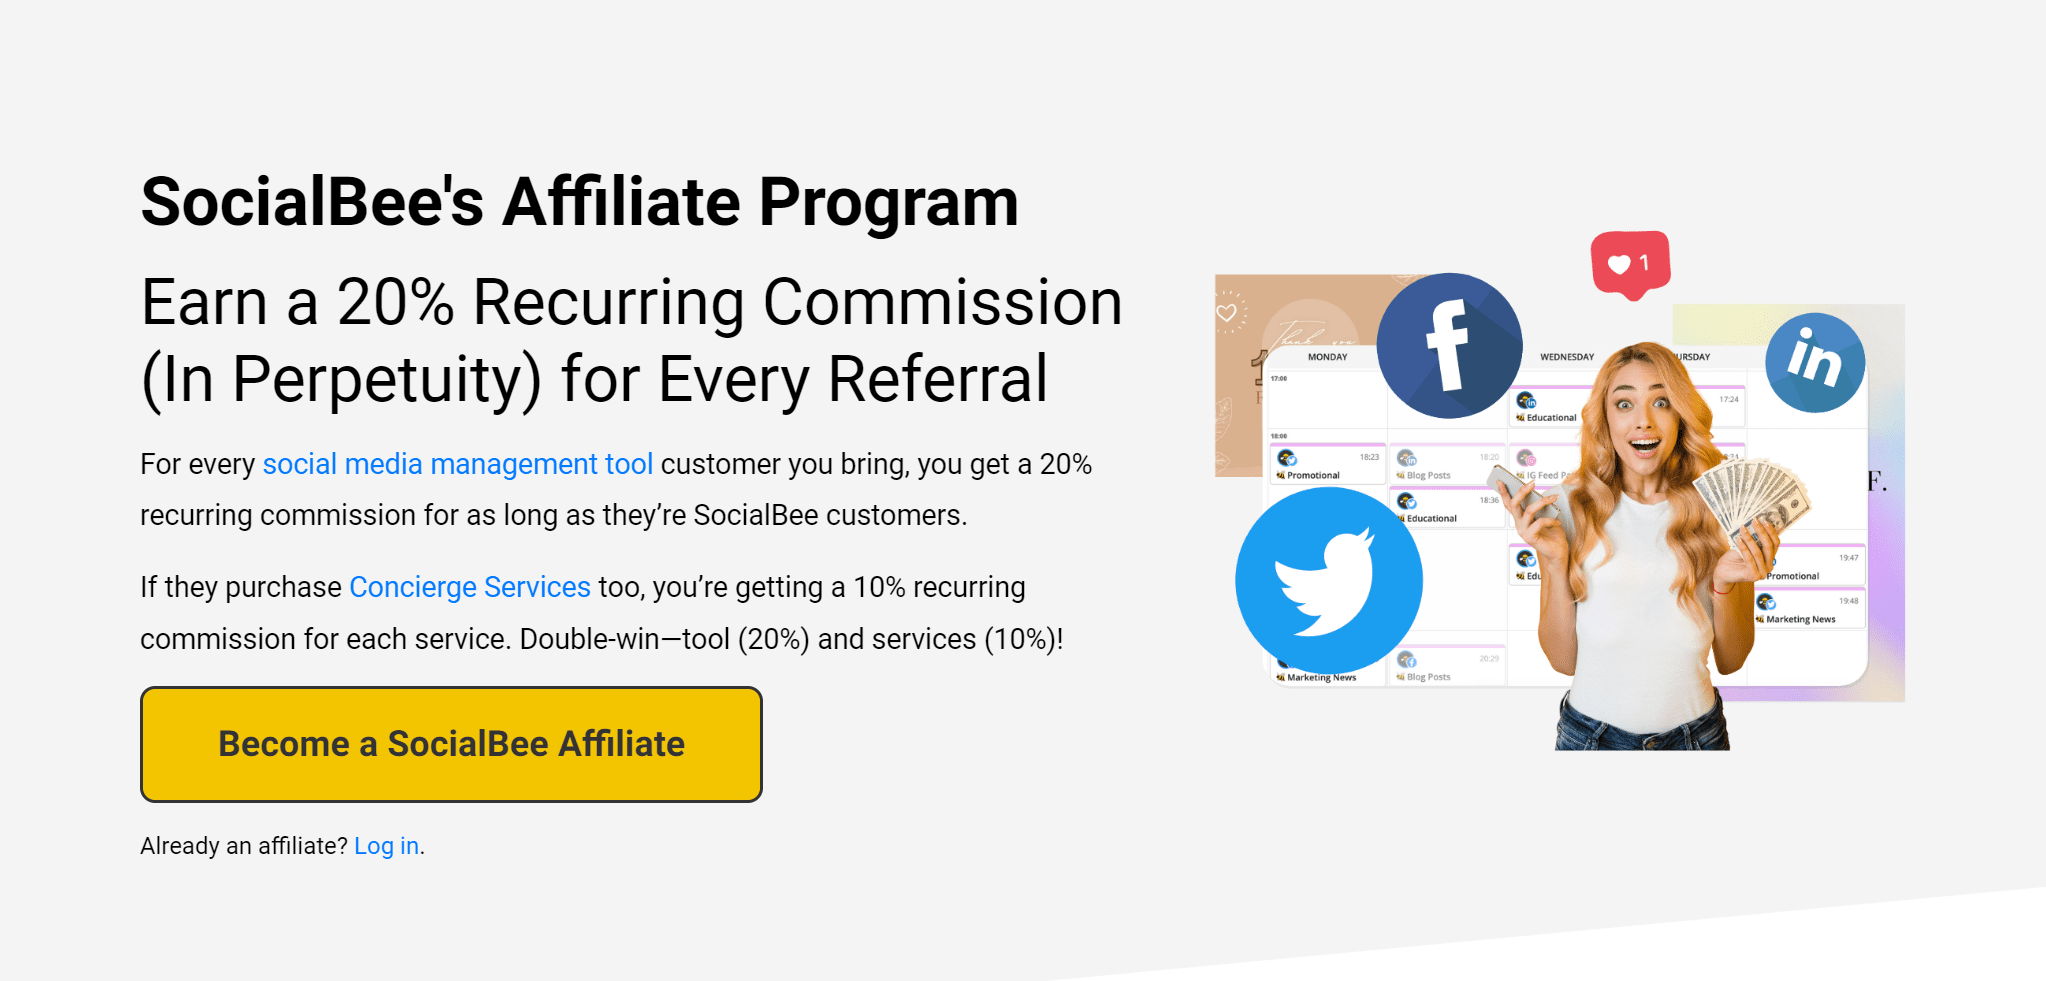 SocialBee's Affiliate Program